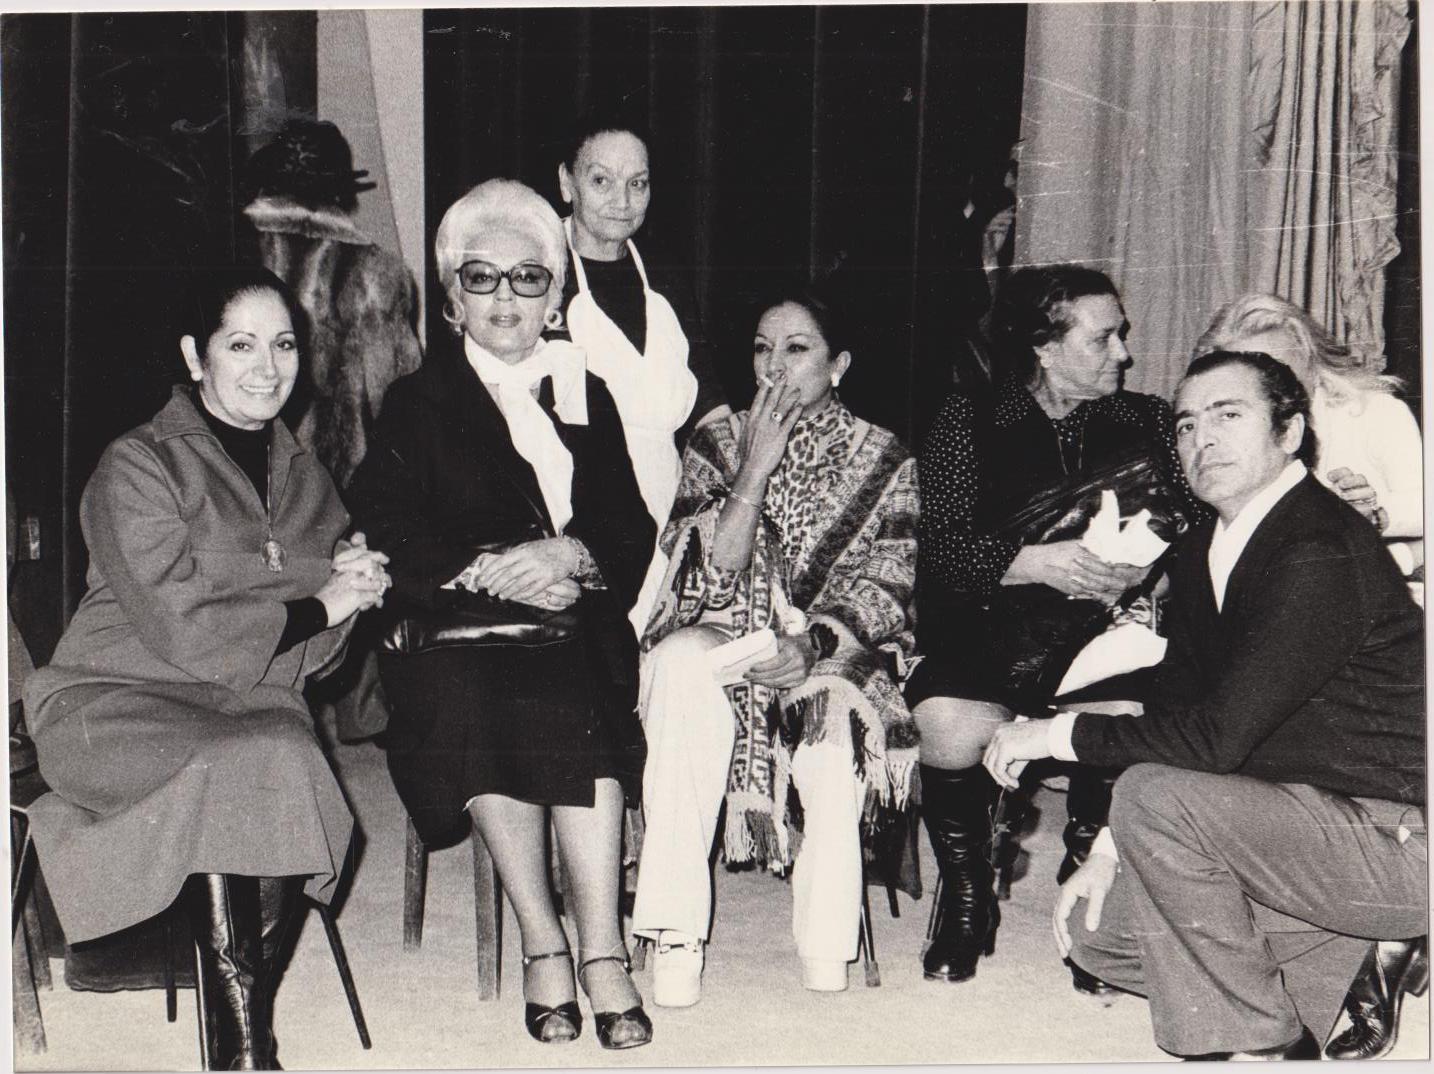 Juanita Reina, Lola Flores y Otros (18x24) Homenaje a Quiroga. Teatro L. de Vega. Sevilla 1976